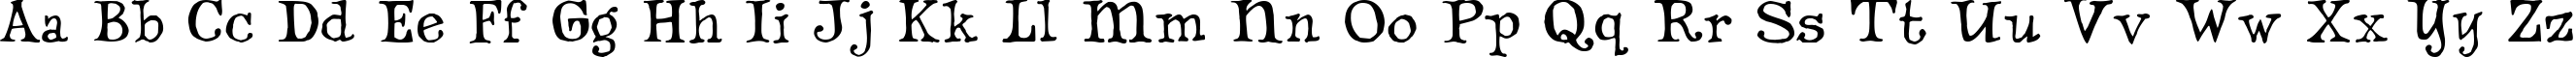 Пример написания английского алфавита шрифтом Dannette